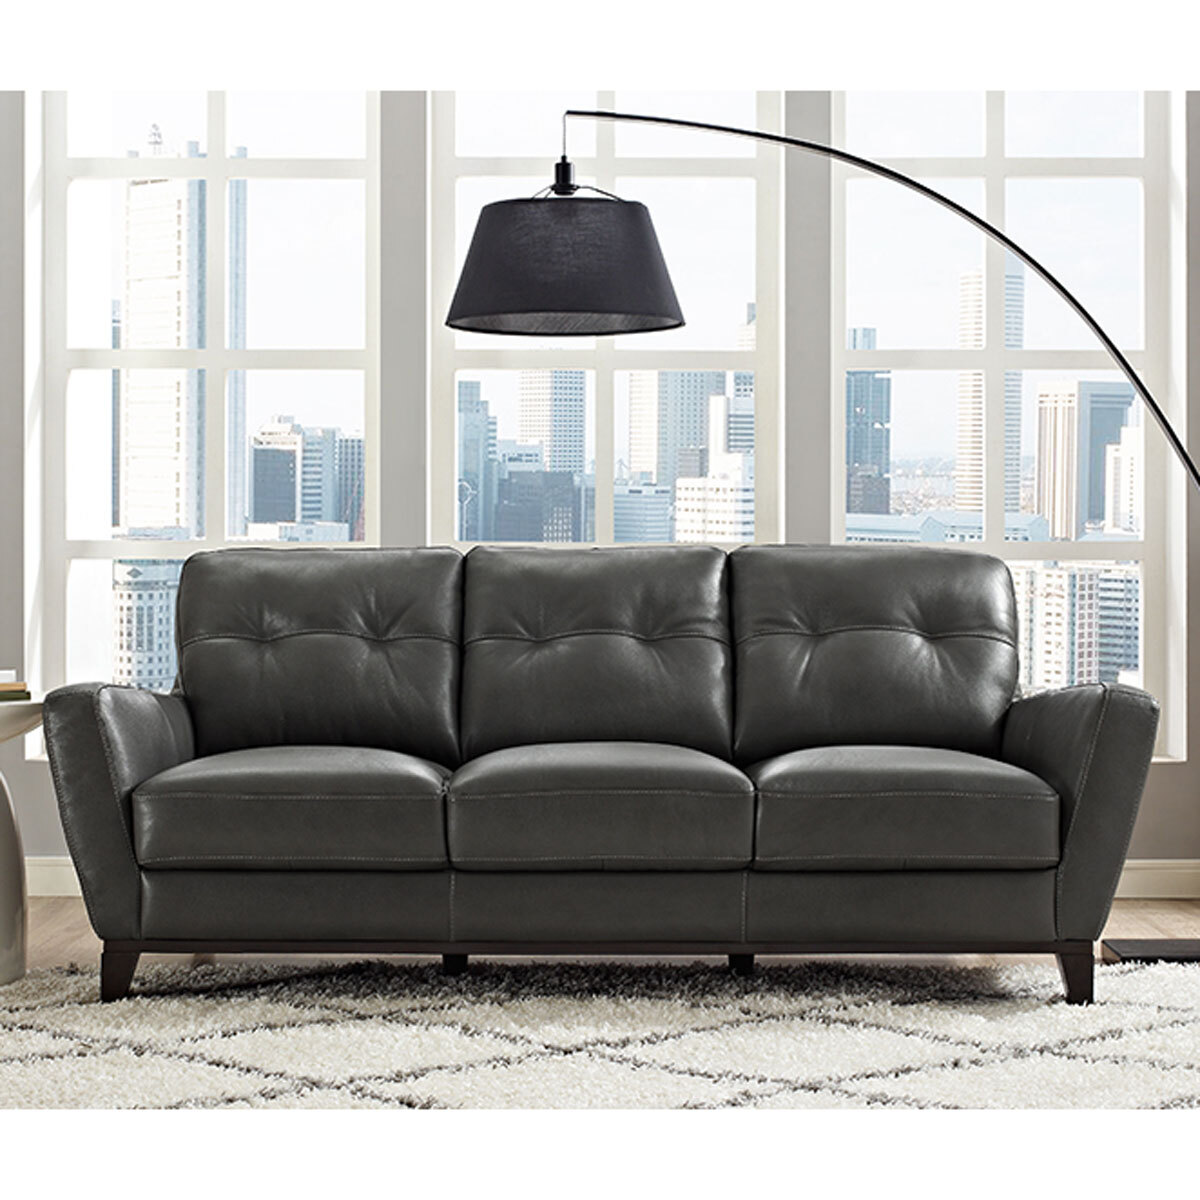 Grey Leather 3 Seater Sofa Costco Uk, Leather Couch Natuzzi